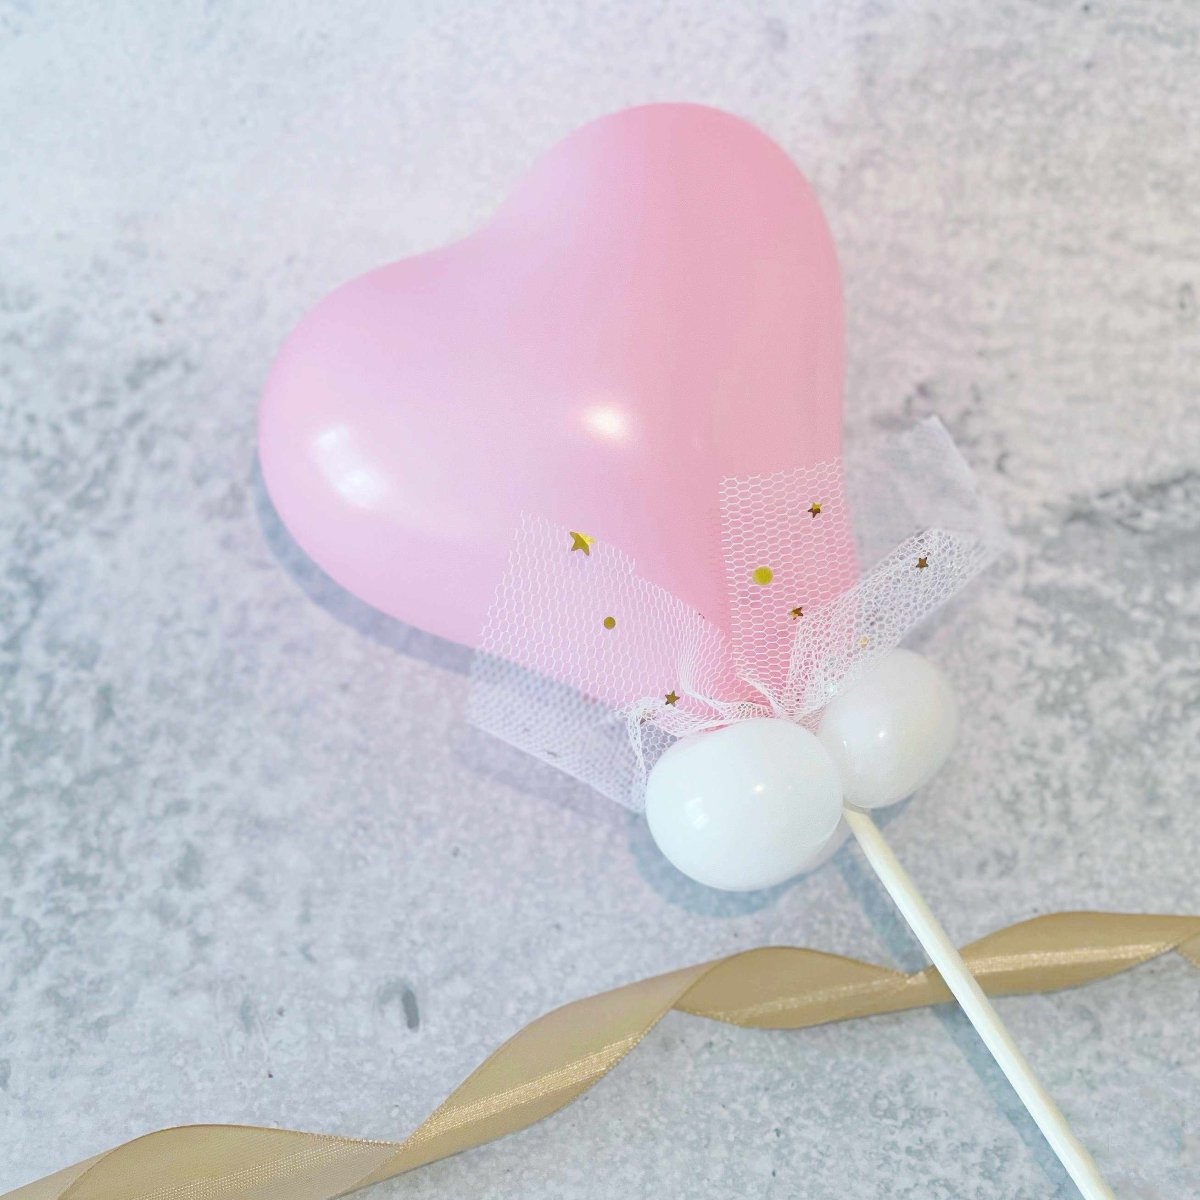 Mini Heart Balloon on Stick - Rainbowly Fresh Fruit Gift and Flower Arrangments